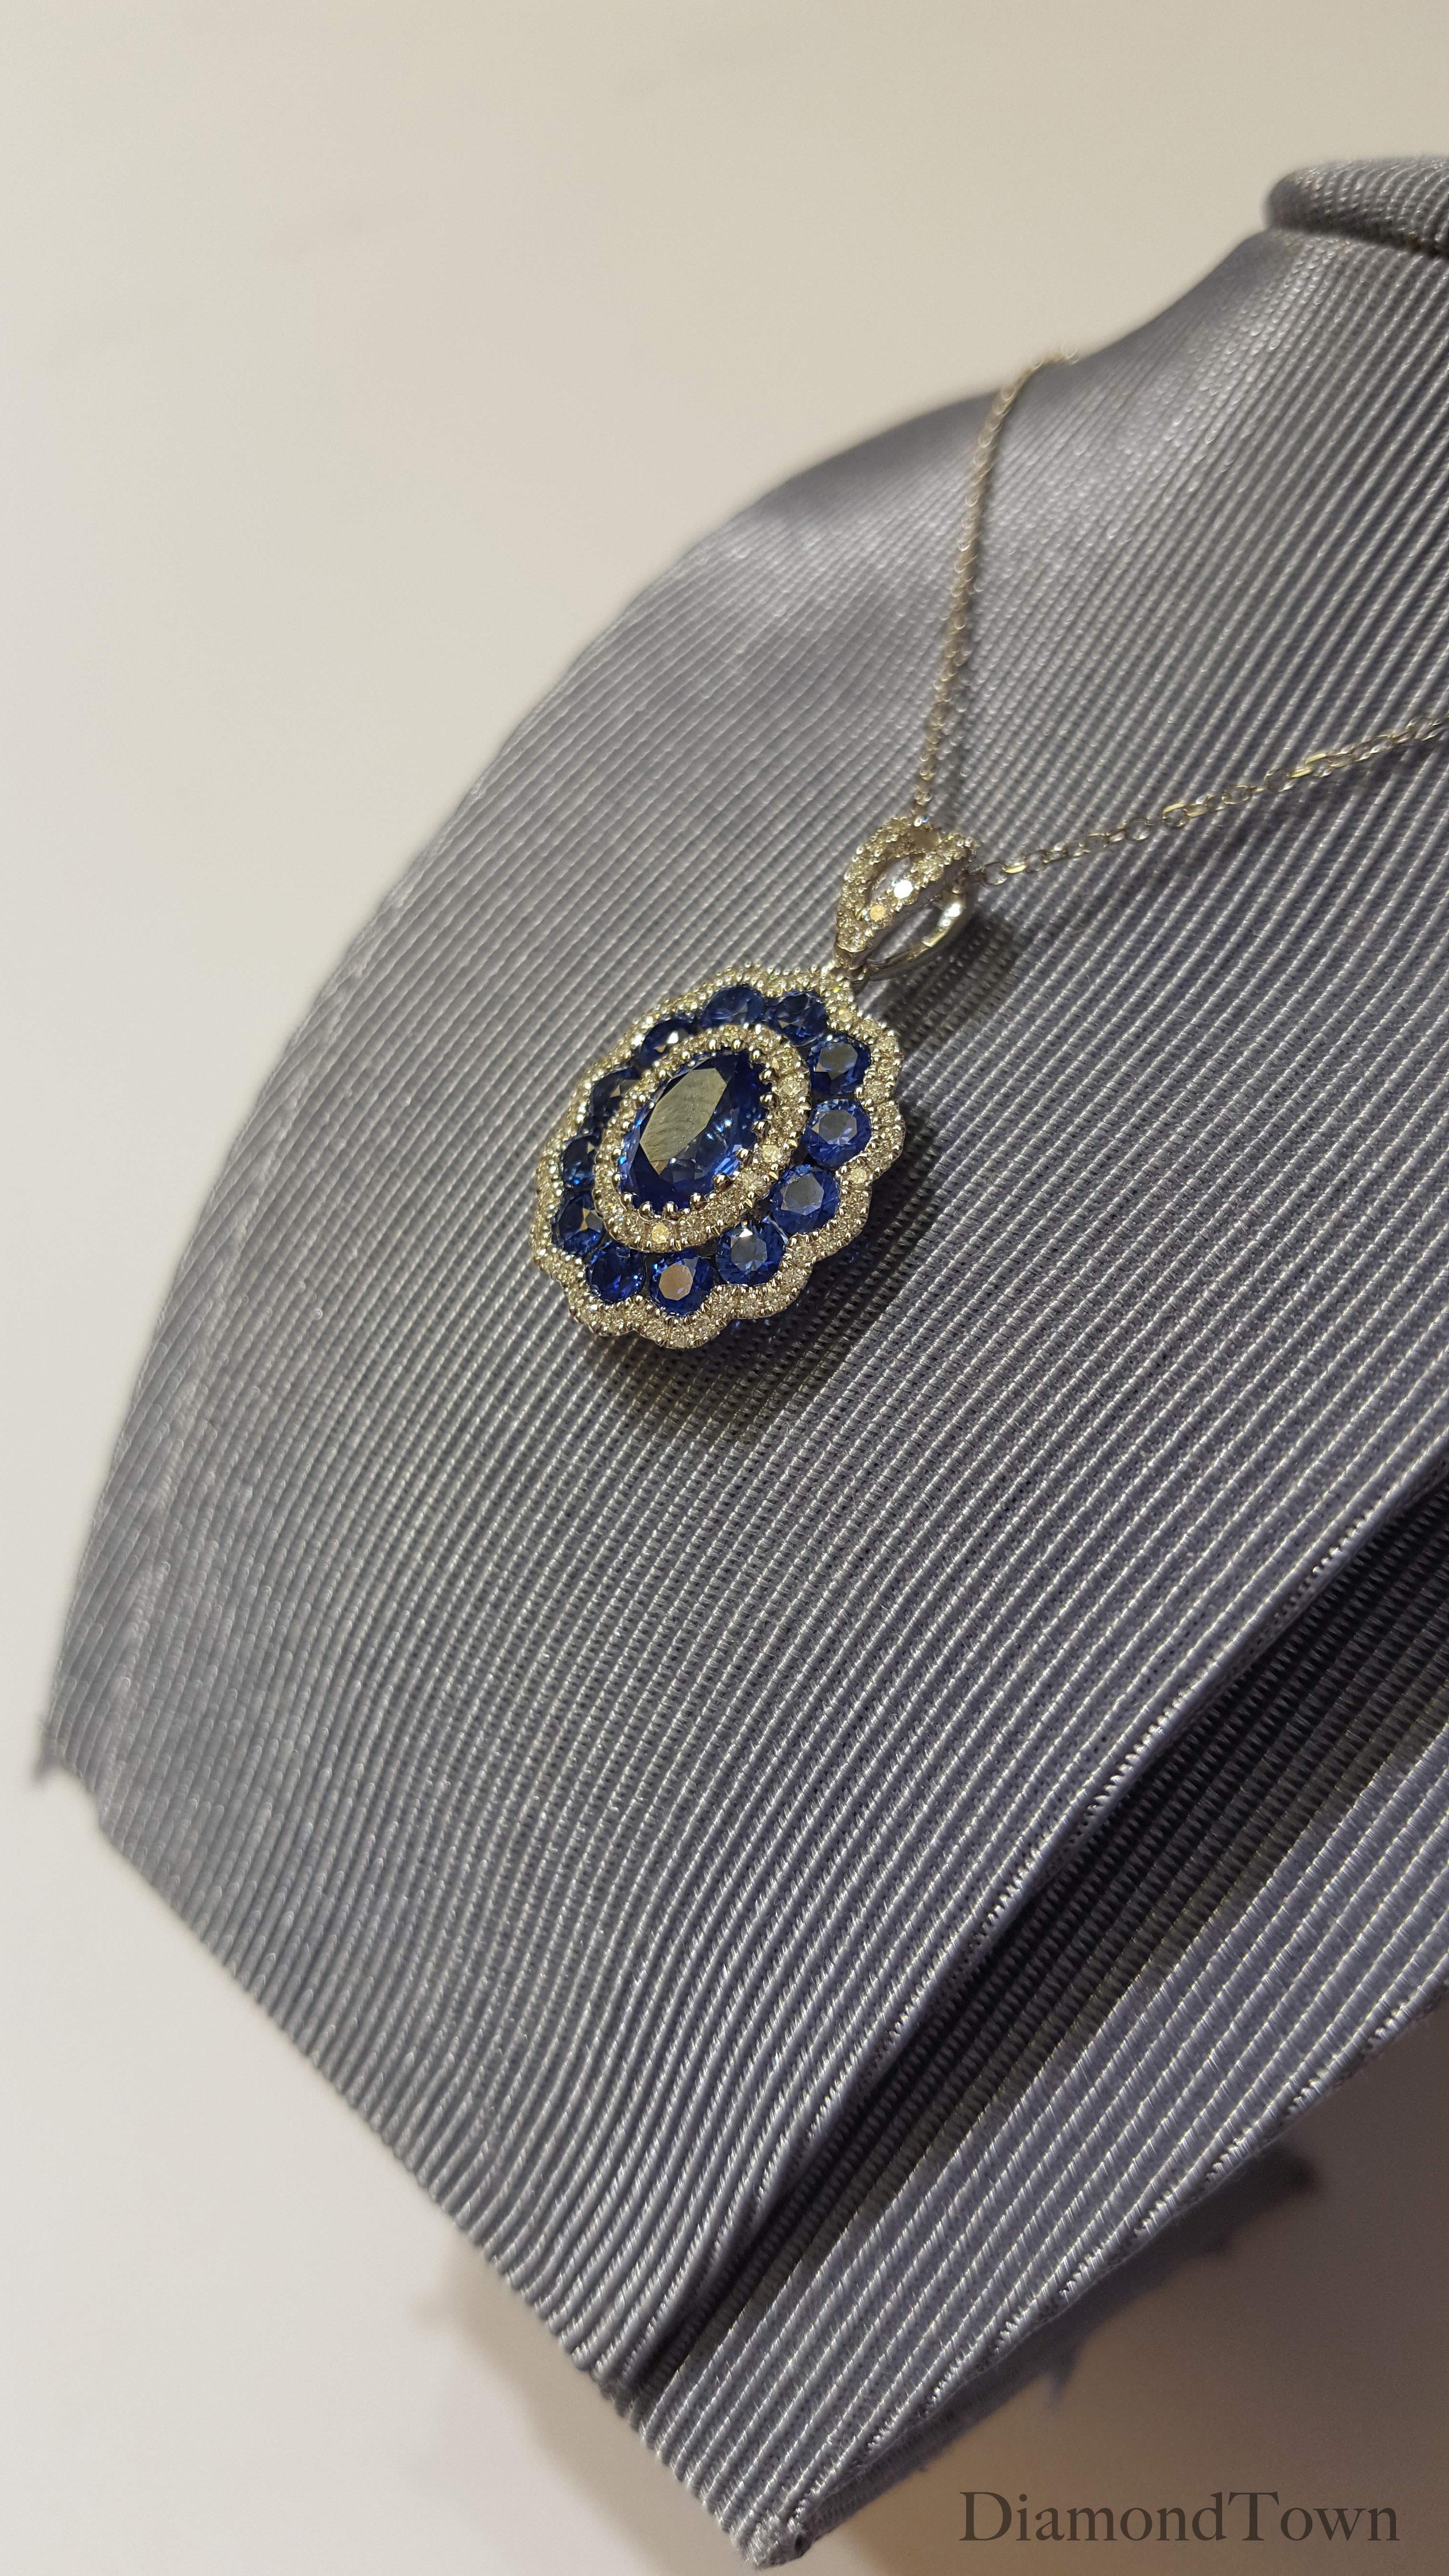 Oval Cut 1.91 Carat Sapphire and Diamond Halo Flower Pendant in 18 Karat White Gold